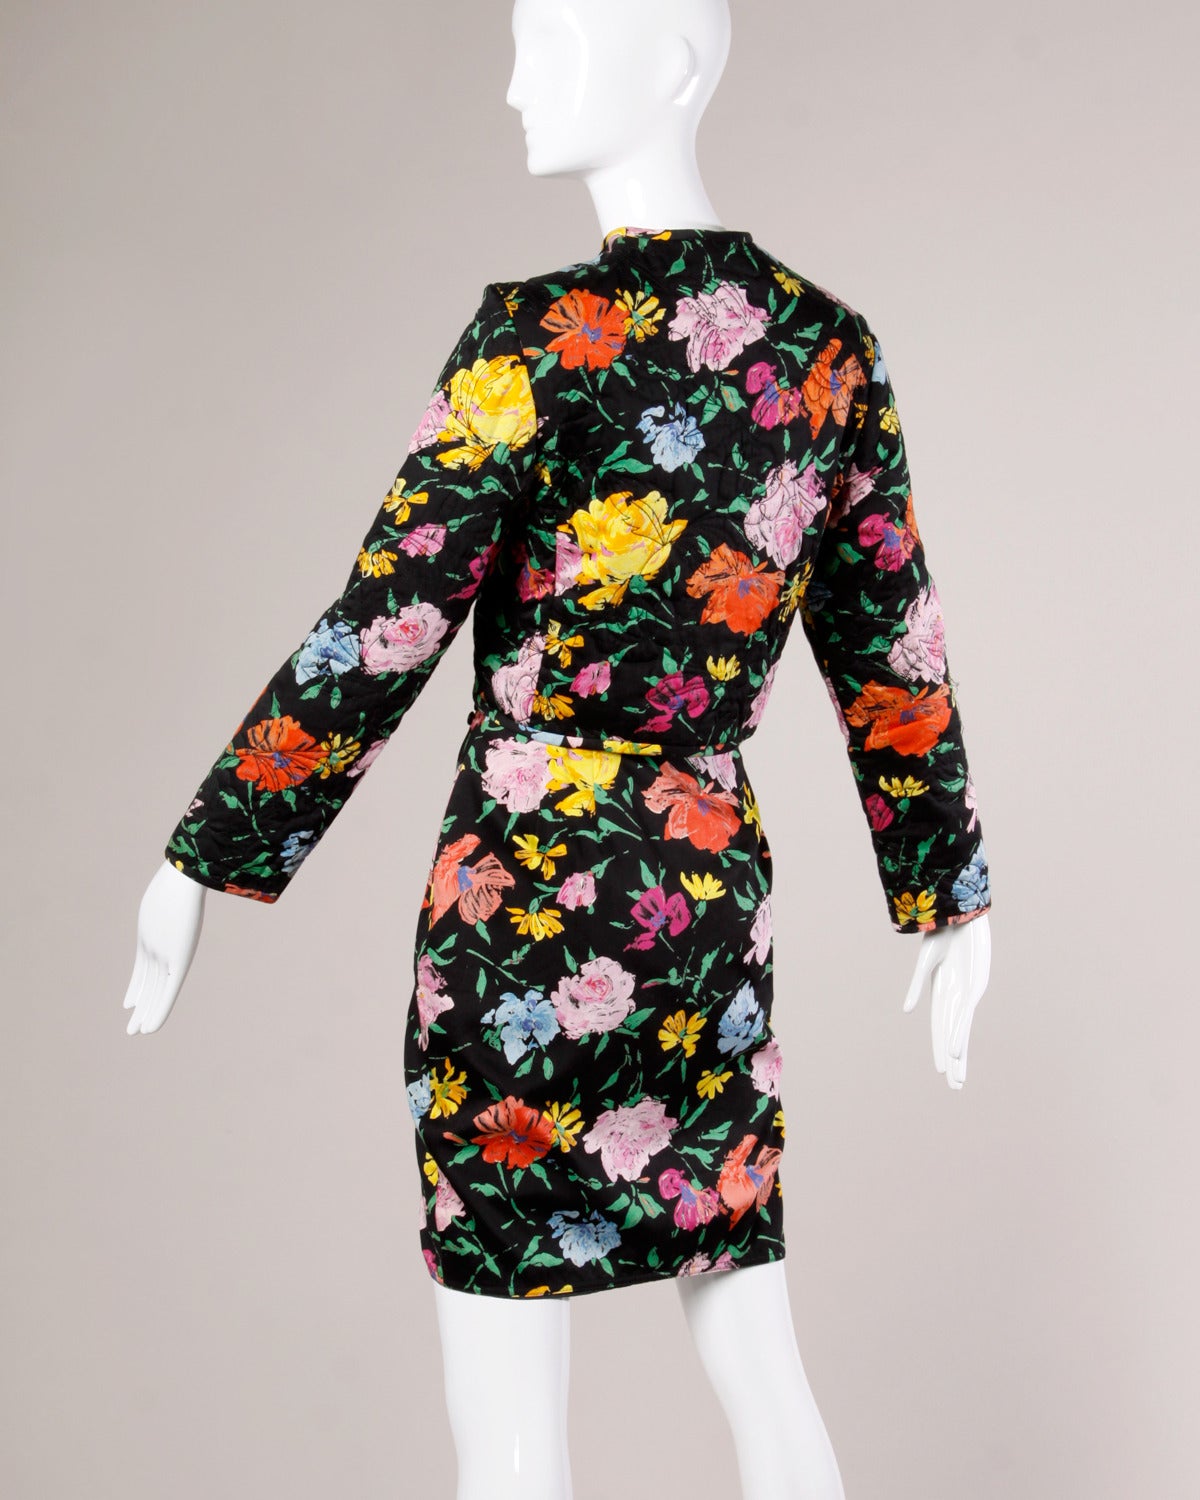 Black Emanuel Ungaro Vintage Floral Print Quilted Jacket + Skirt Suit Ensemble